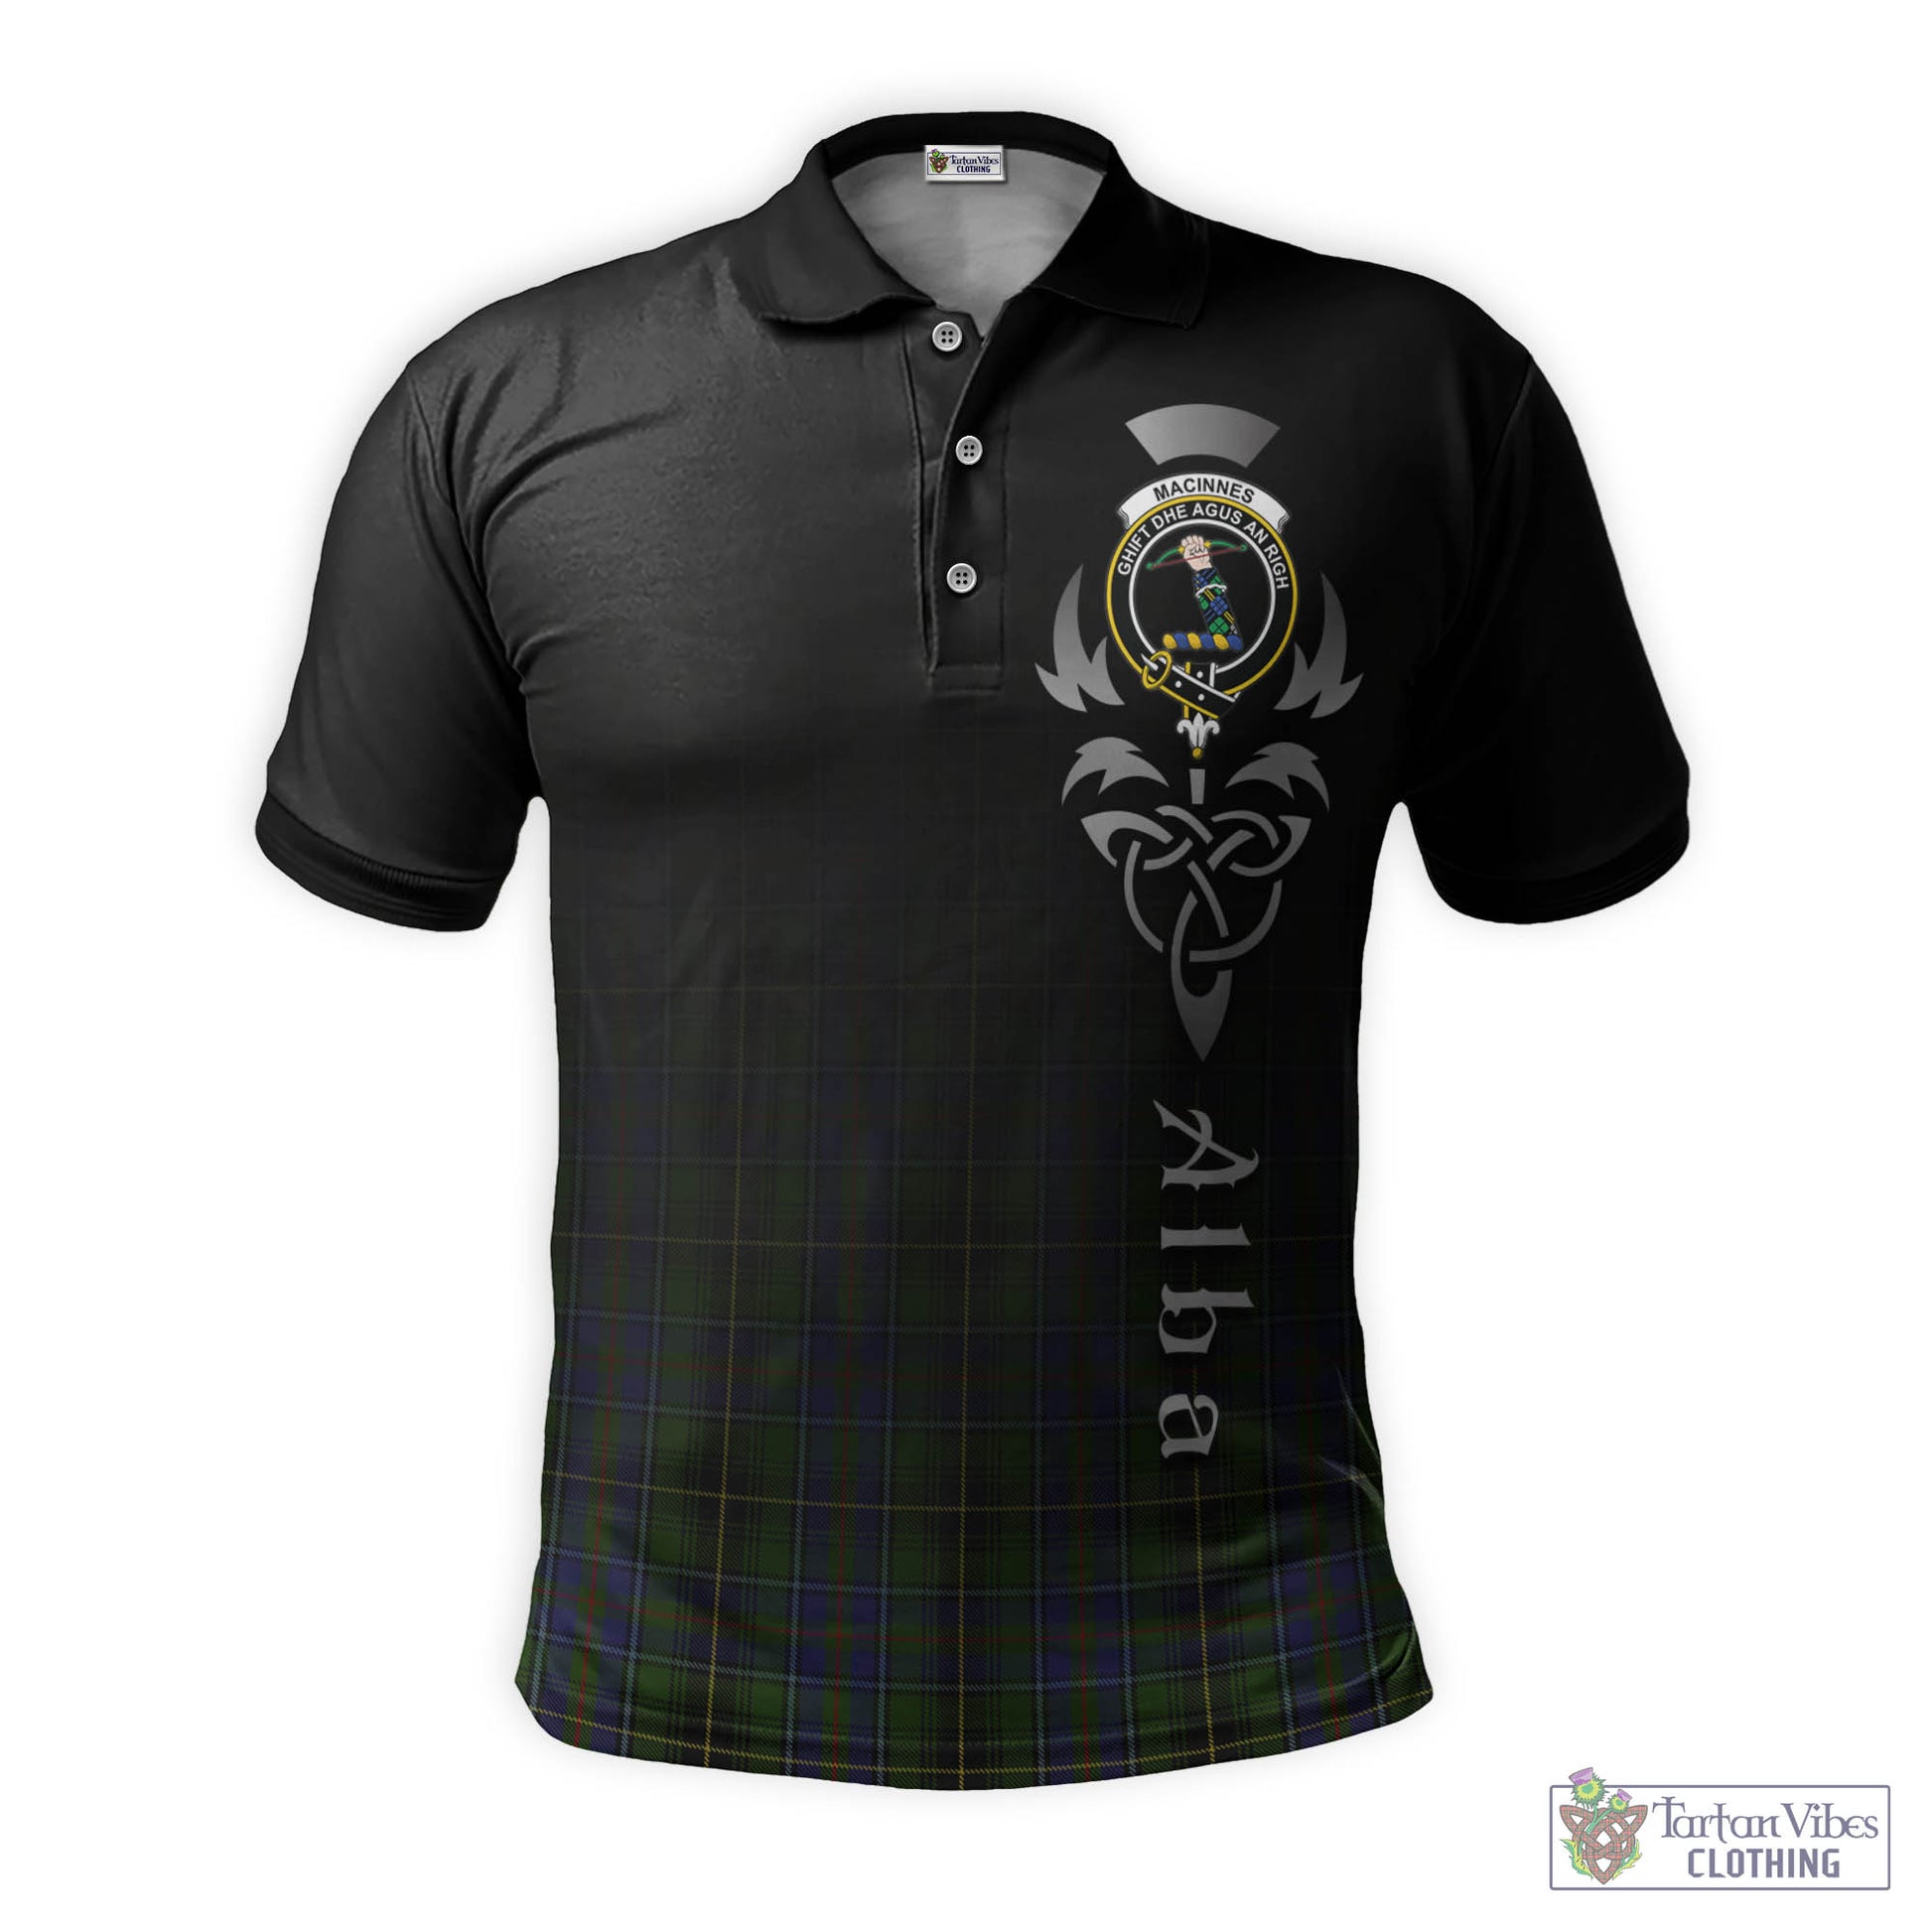 Tartan Vibes Clothing MacInnes Tartan Polo Shirt Featuring Alba Gu Brath Family Crest Celtic Inspired